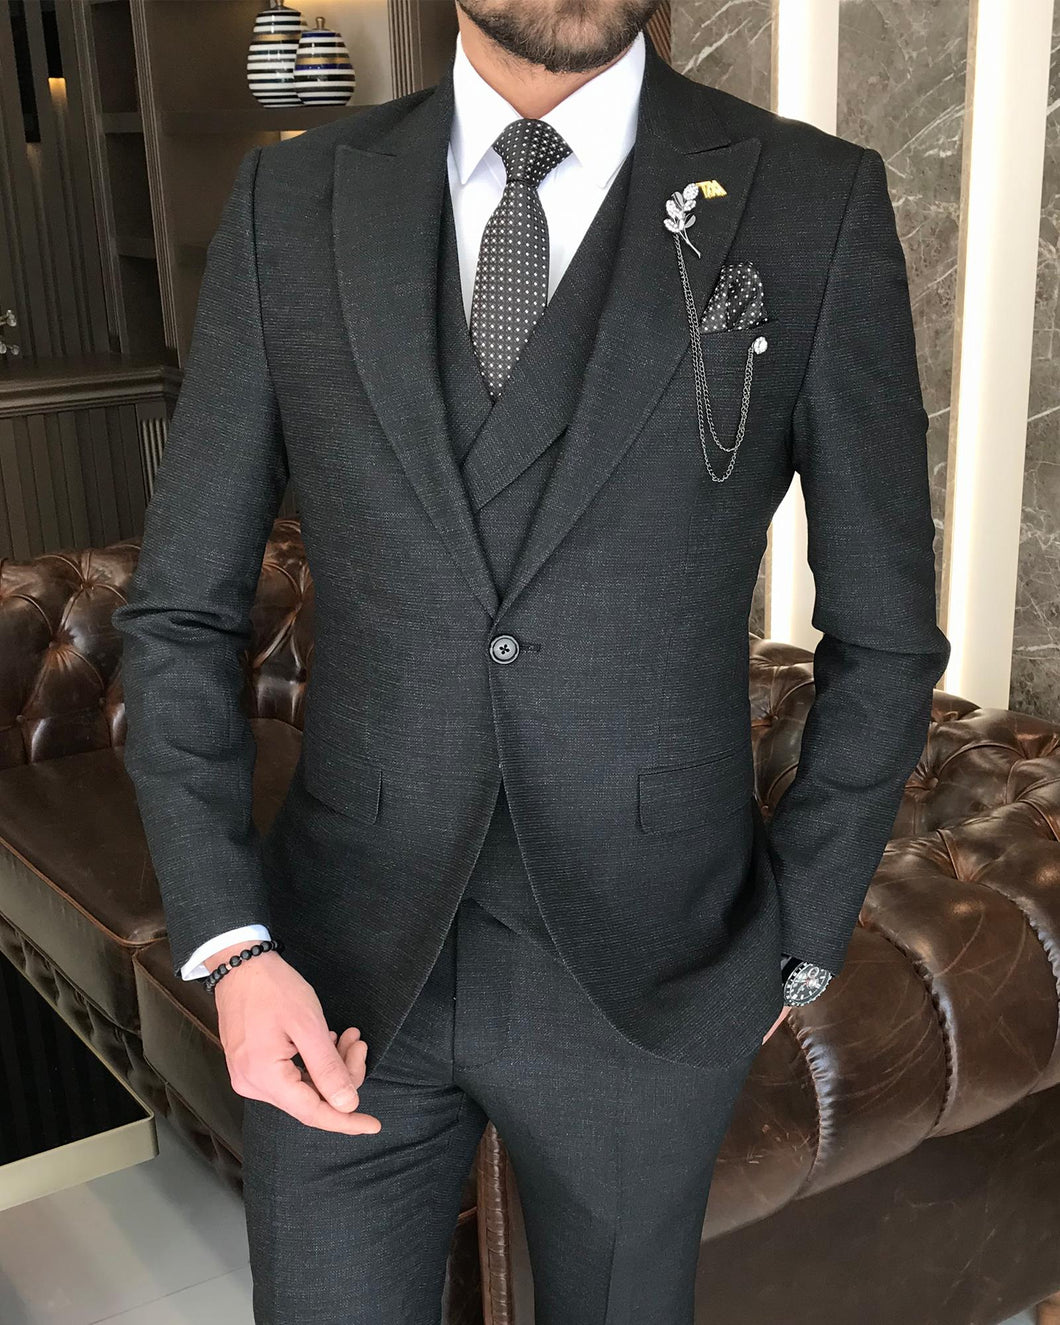 Joseph Slim-Fit Solid Black Suit